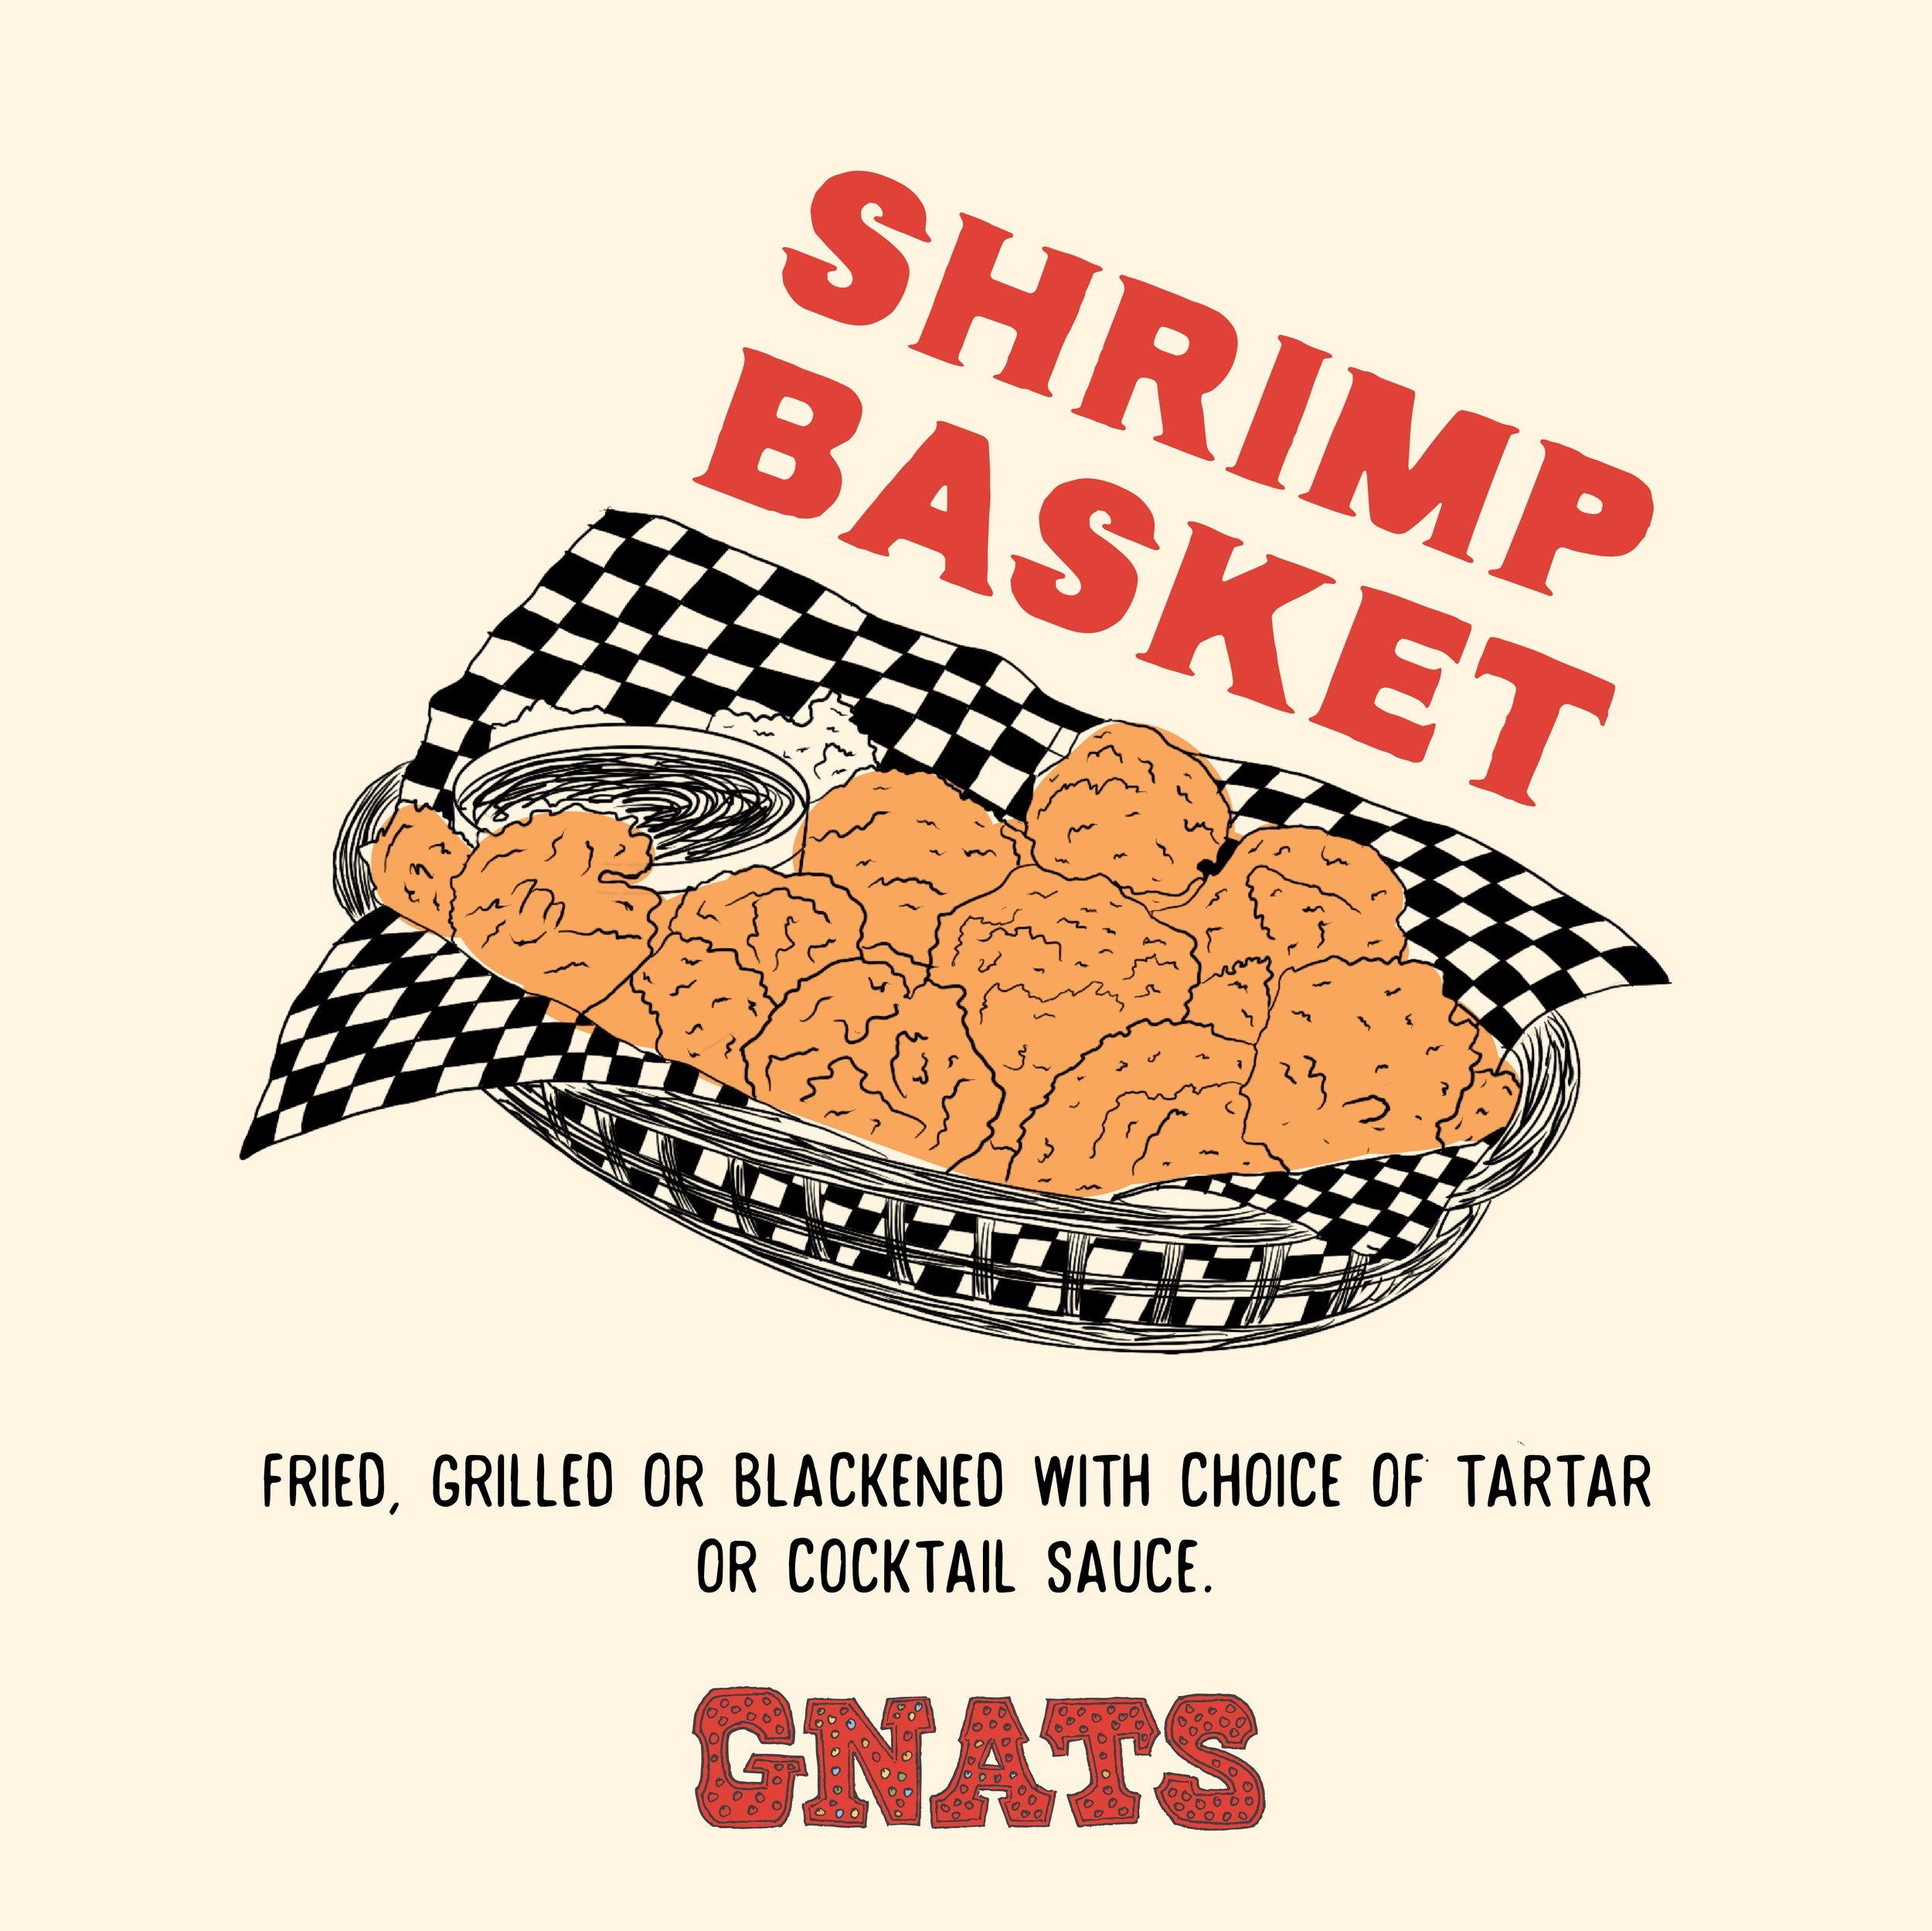 1221-prg-gnats-January social graphics_post-shrimp basket.jpg